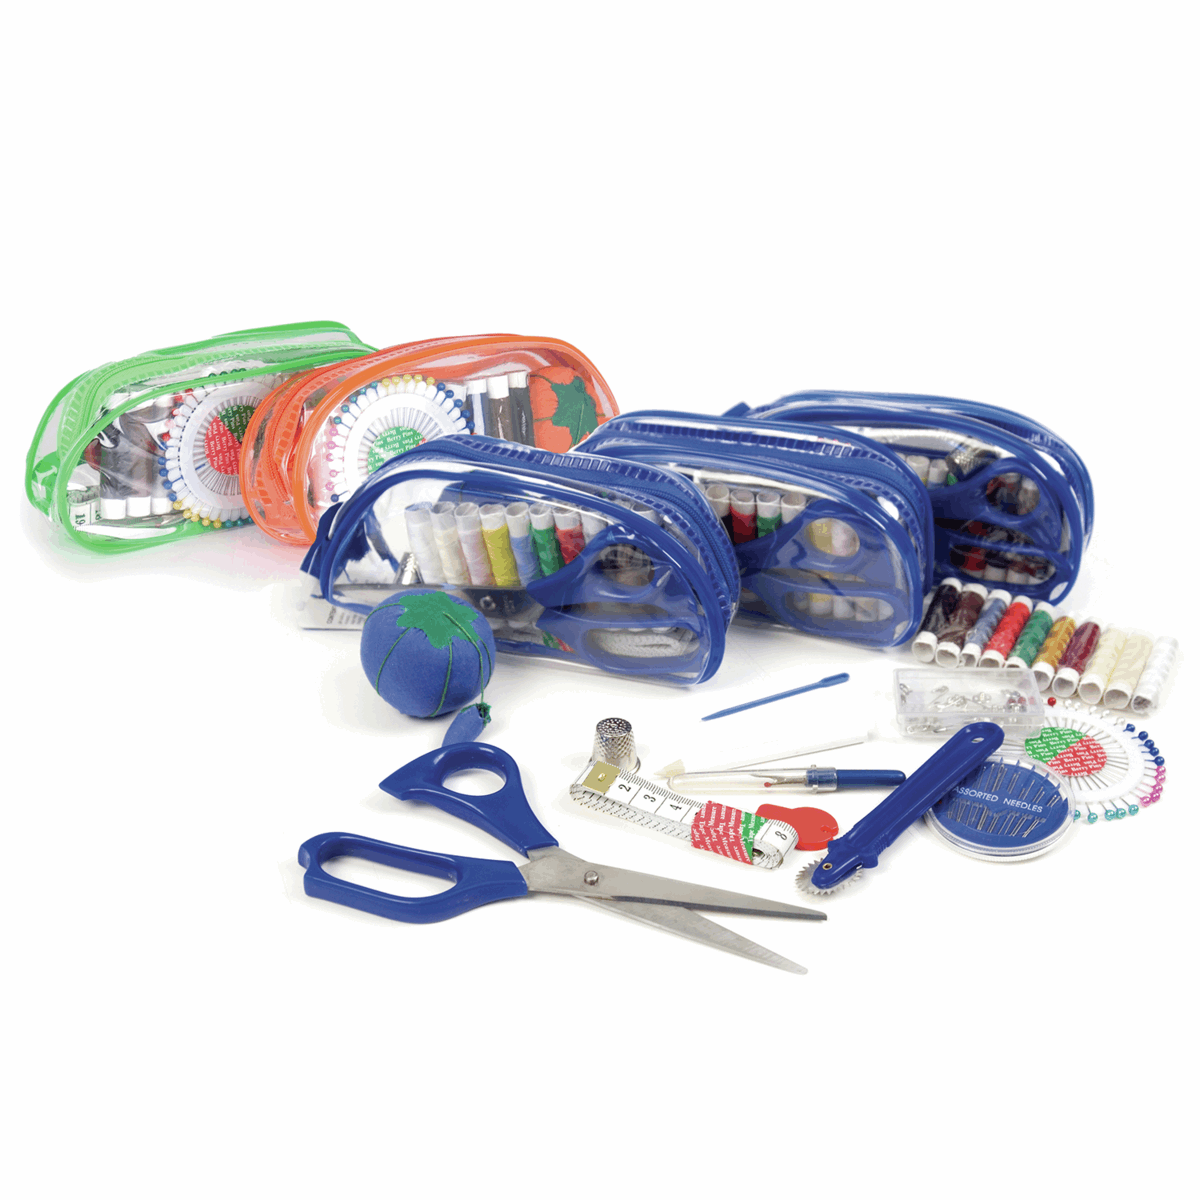 1 x Jumbo Deluxe Sewing Kit Scissors Tape Measure Thread Pins Thimble PVC Zipped Bag